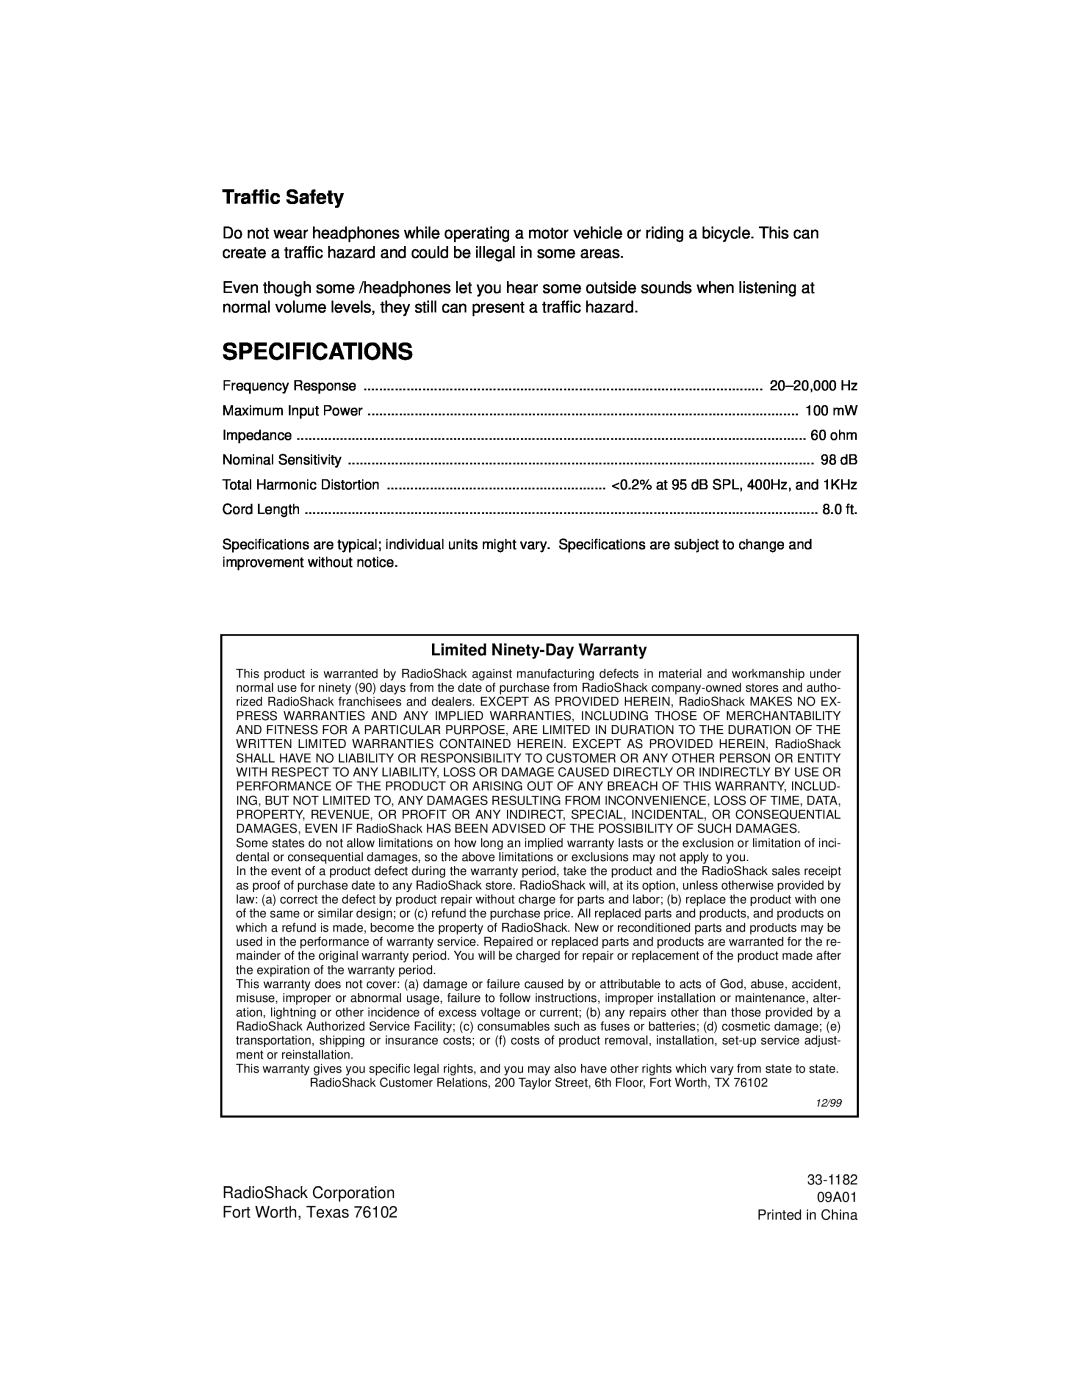 Radio Shack 33-1182 owner manual Specifications, Traffic Safety, Limited Ninety-DayWarranty 